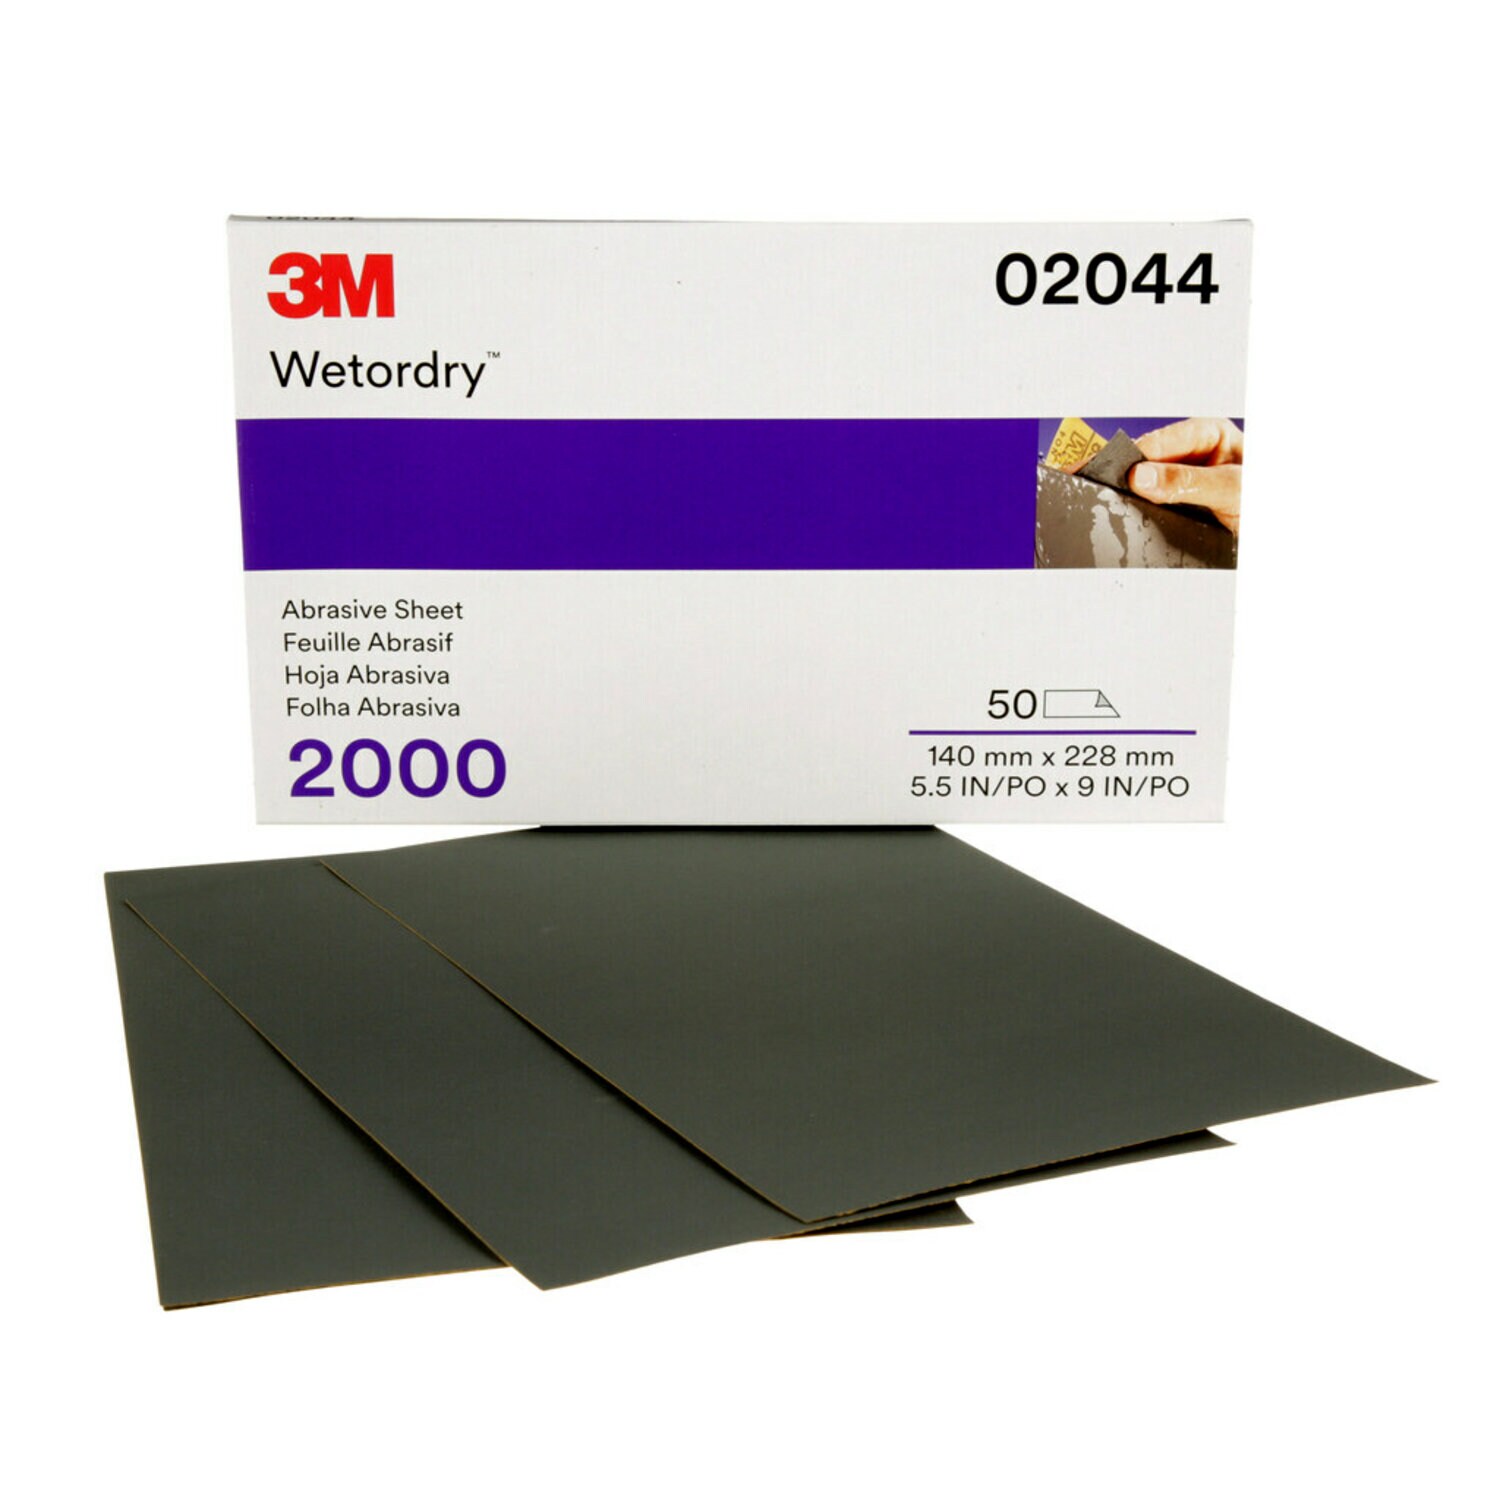 7000028328 - 3M Wetordry Abrasive Sheet 401Q, 02044, 2000, 5 1/2 in x 9 in, 50
sheets per carton, 5 cartons per case